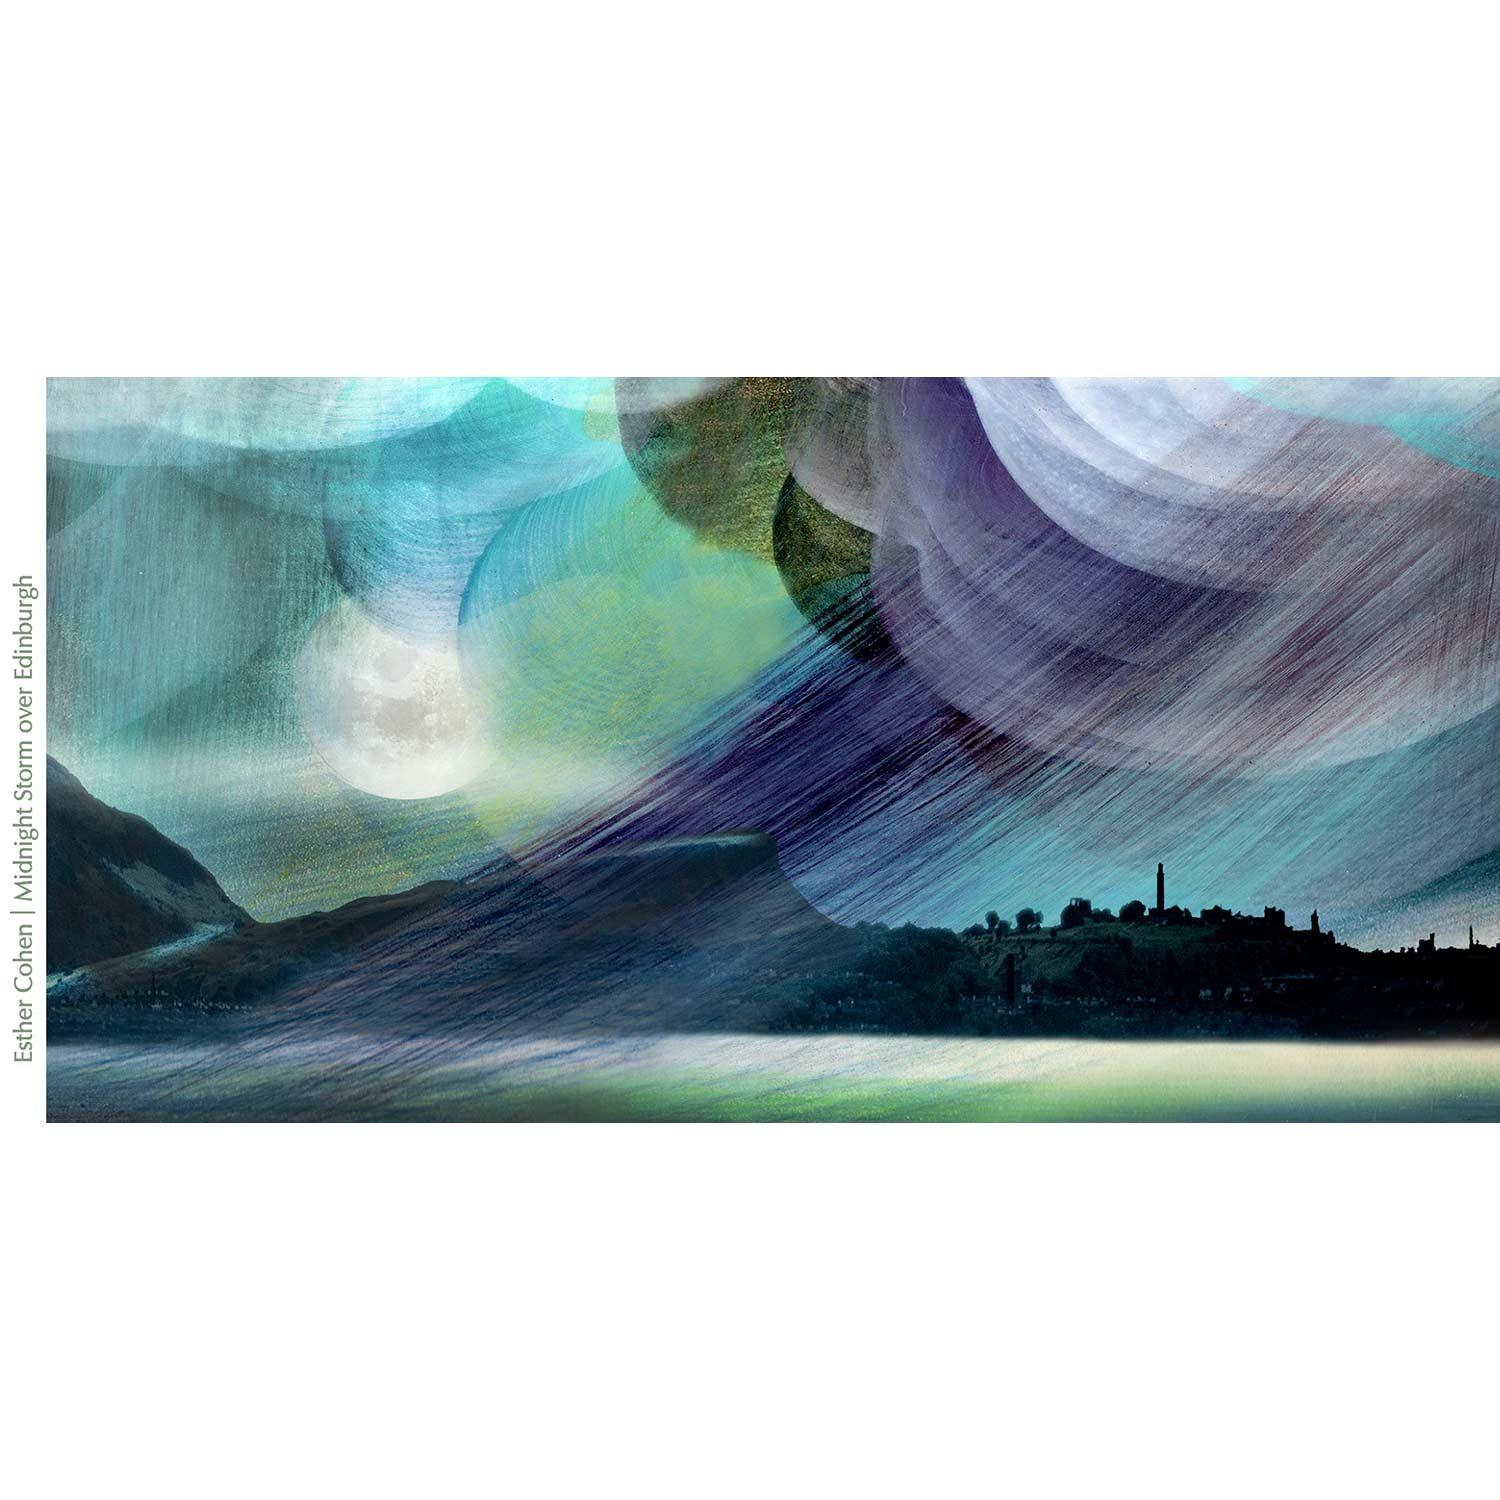 Midnight Storm over Edinburgh by artist Esther Cohen